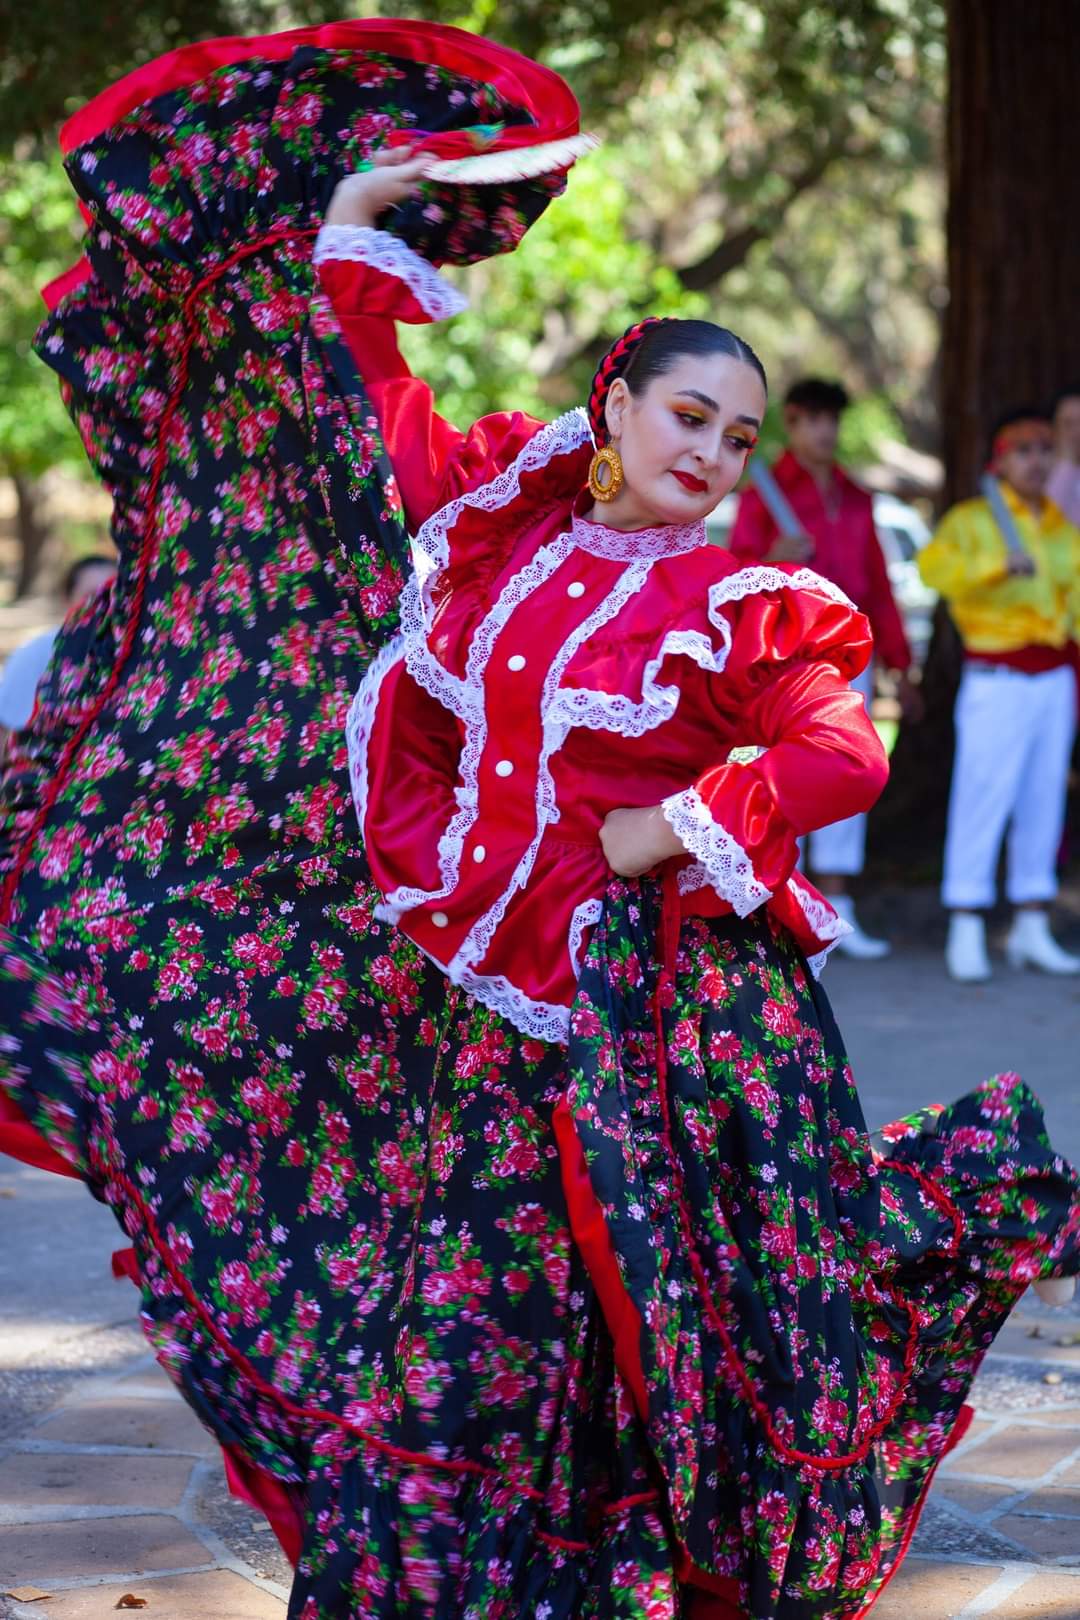 Dancer from “Folklorico Juvenil - Danzantes Unidos de Vacaville”  performing at Peña Adobe Park.